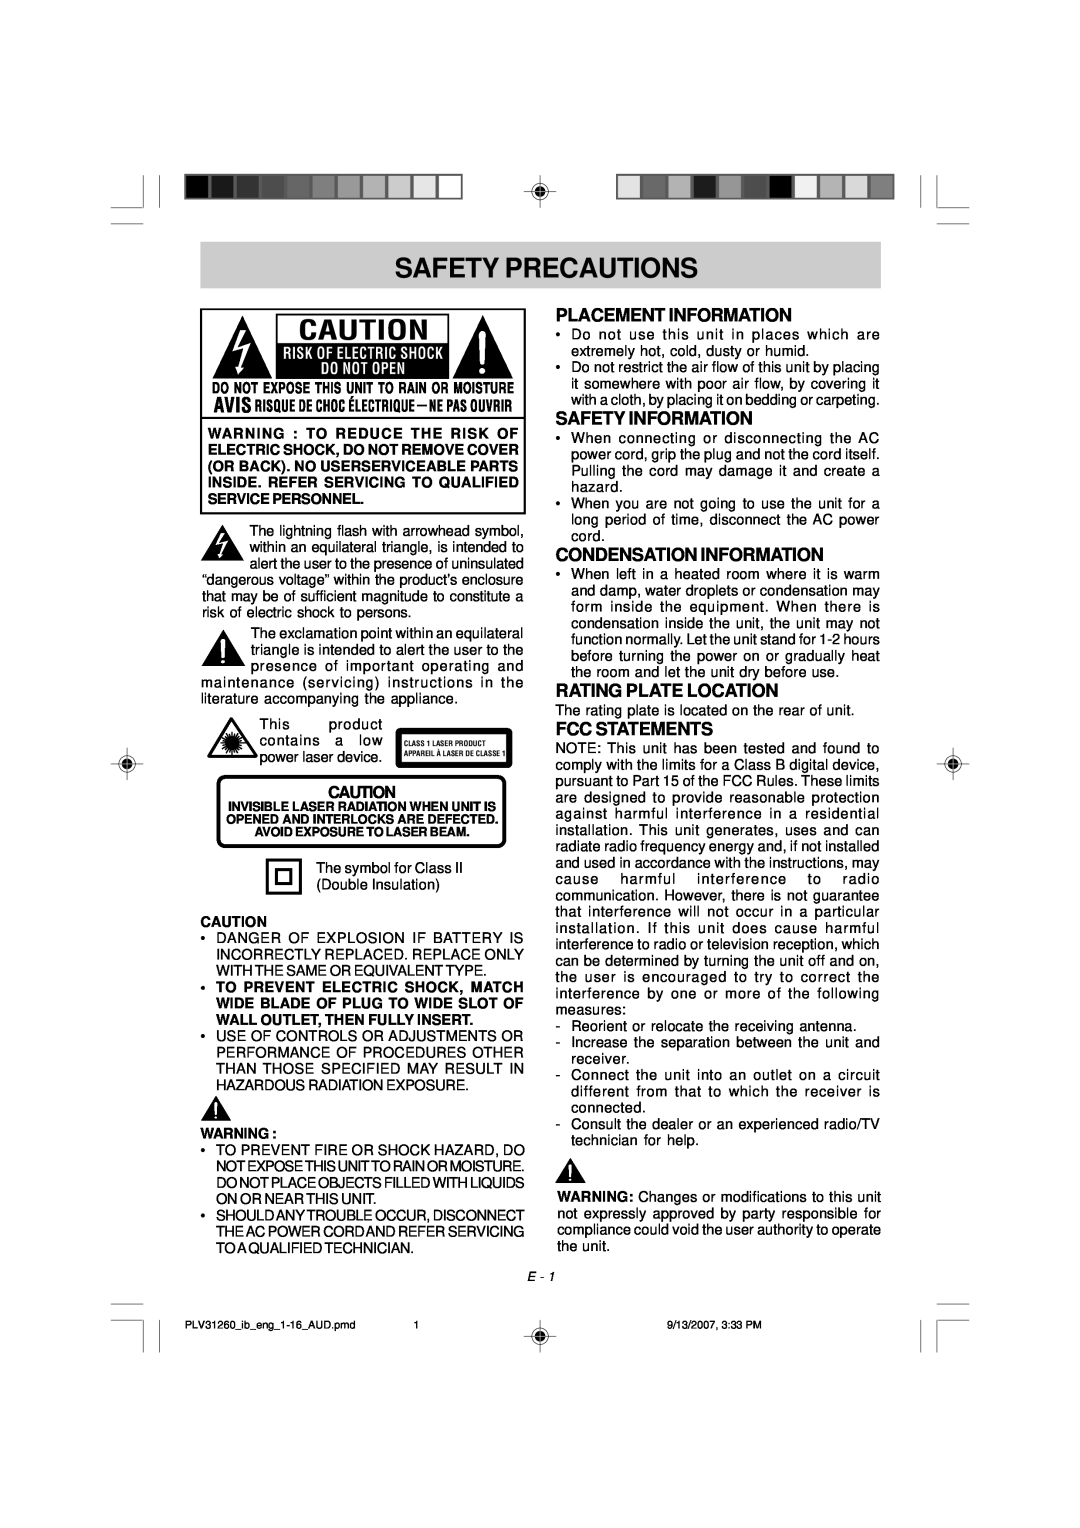 Audiovox FPE2607DV Safety Precautions, Placement Information, Safety Information, Condensation Information, Fcc Statements 